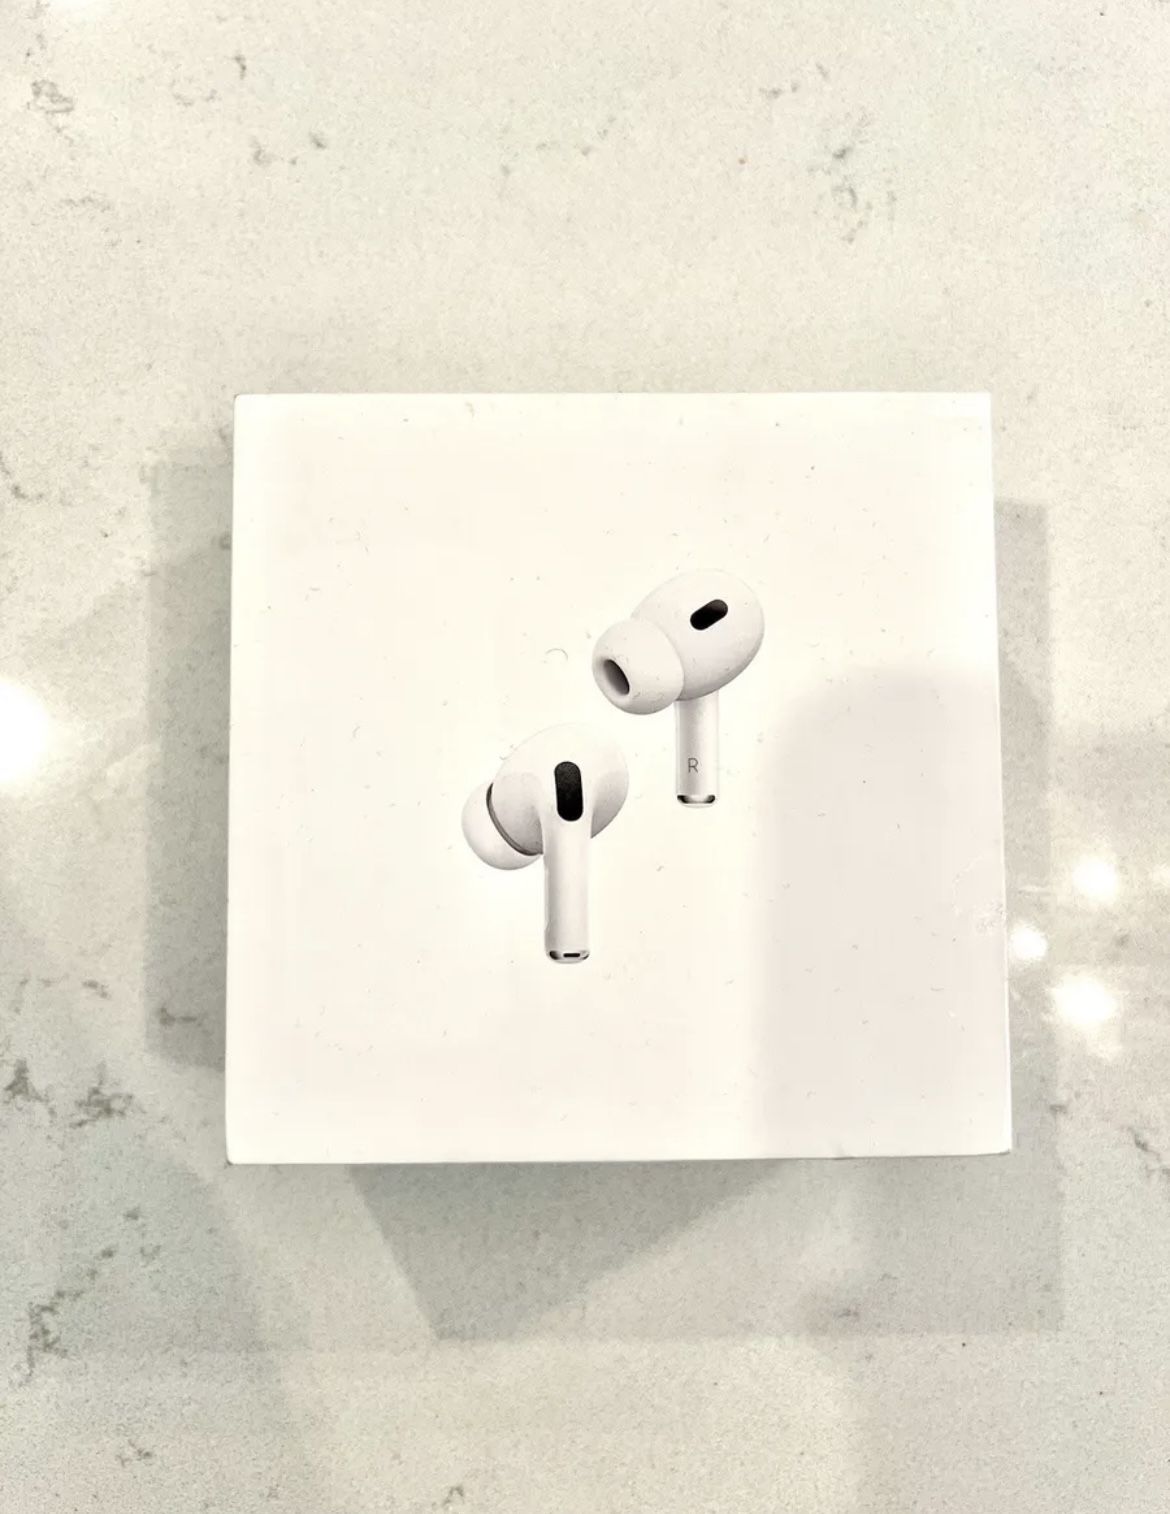 Apple AirPods Pro (2nd Generation) Wireless Earbuds In Ear Headphones Gym Headphones 